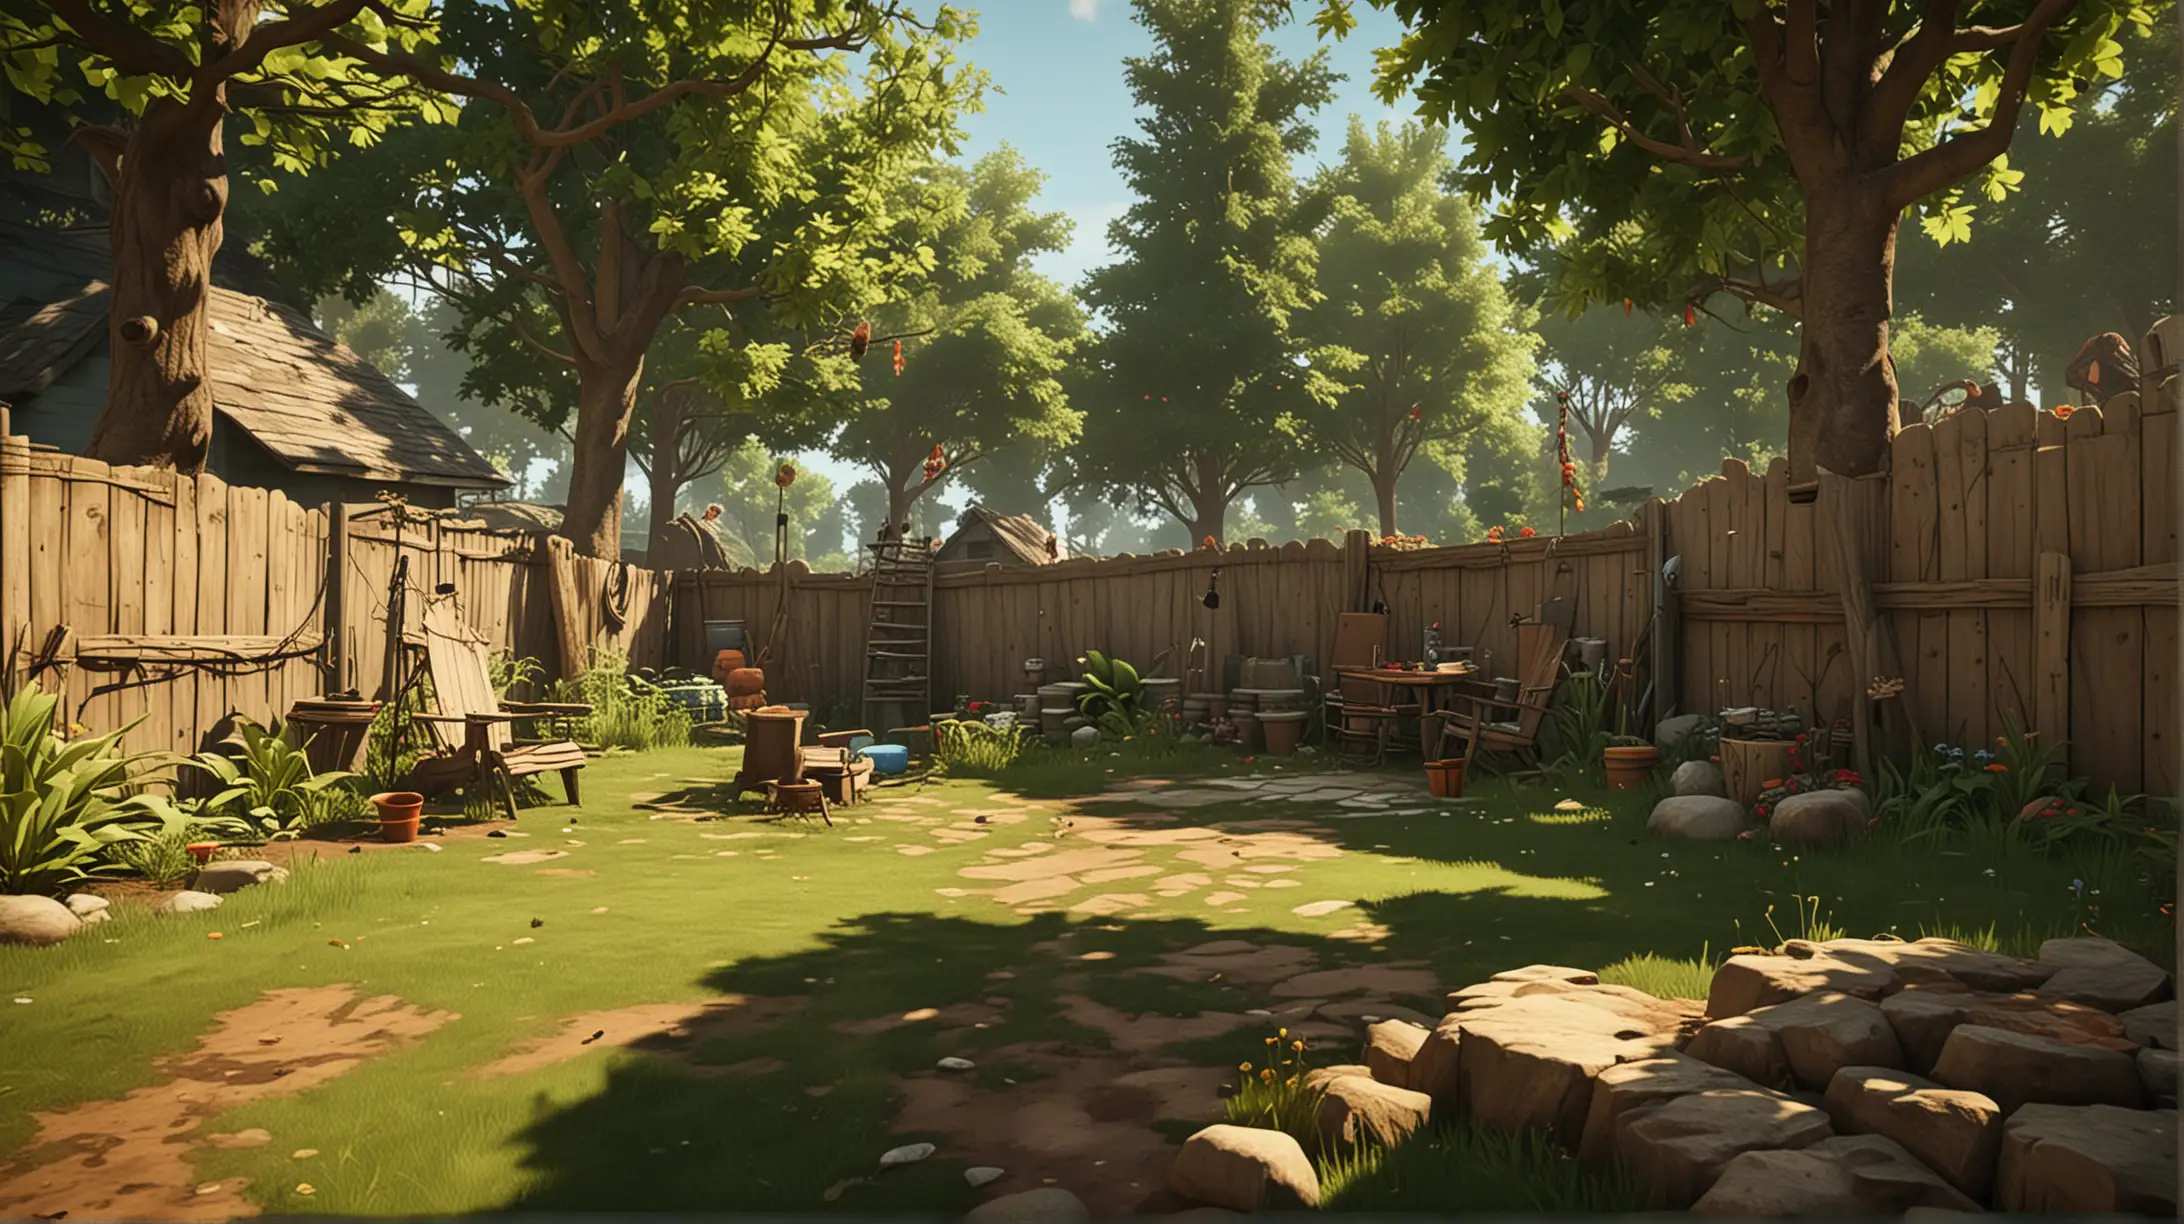 Gamer Grove Grounded Video Game Scene in the Backyard